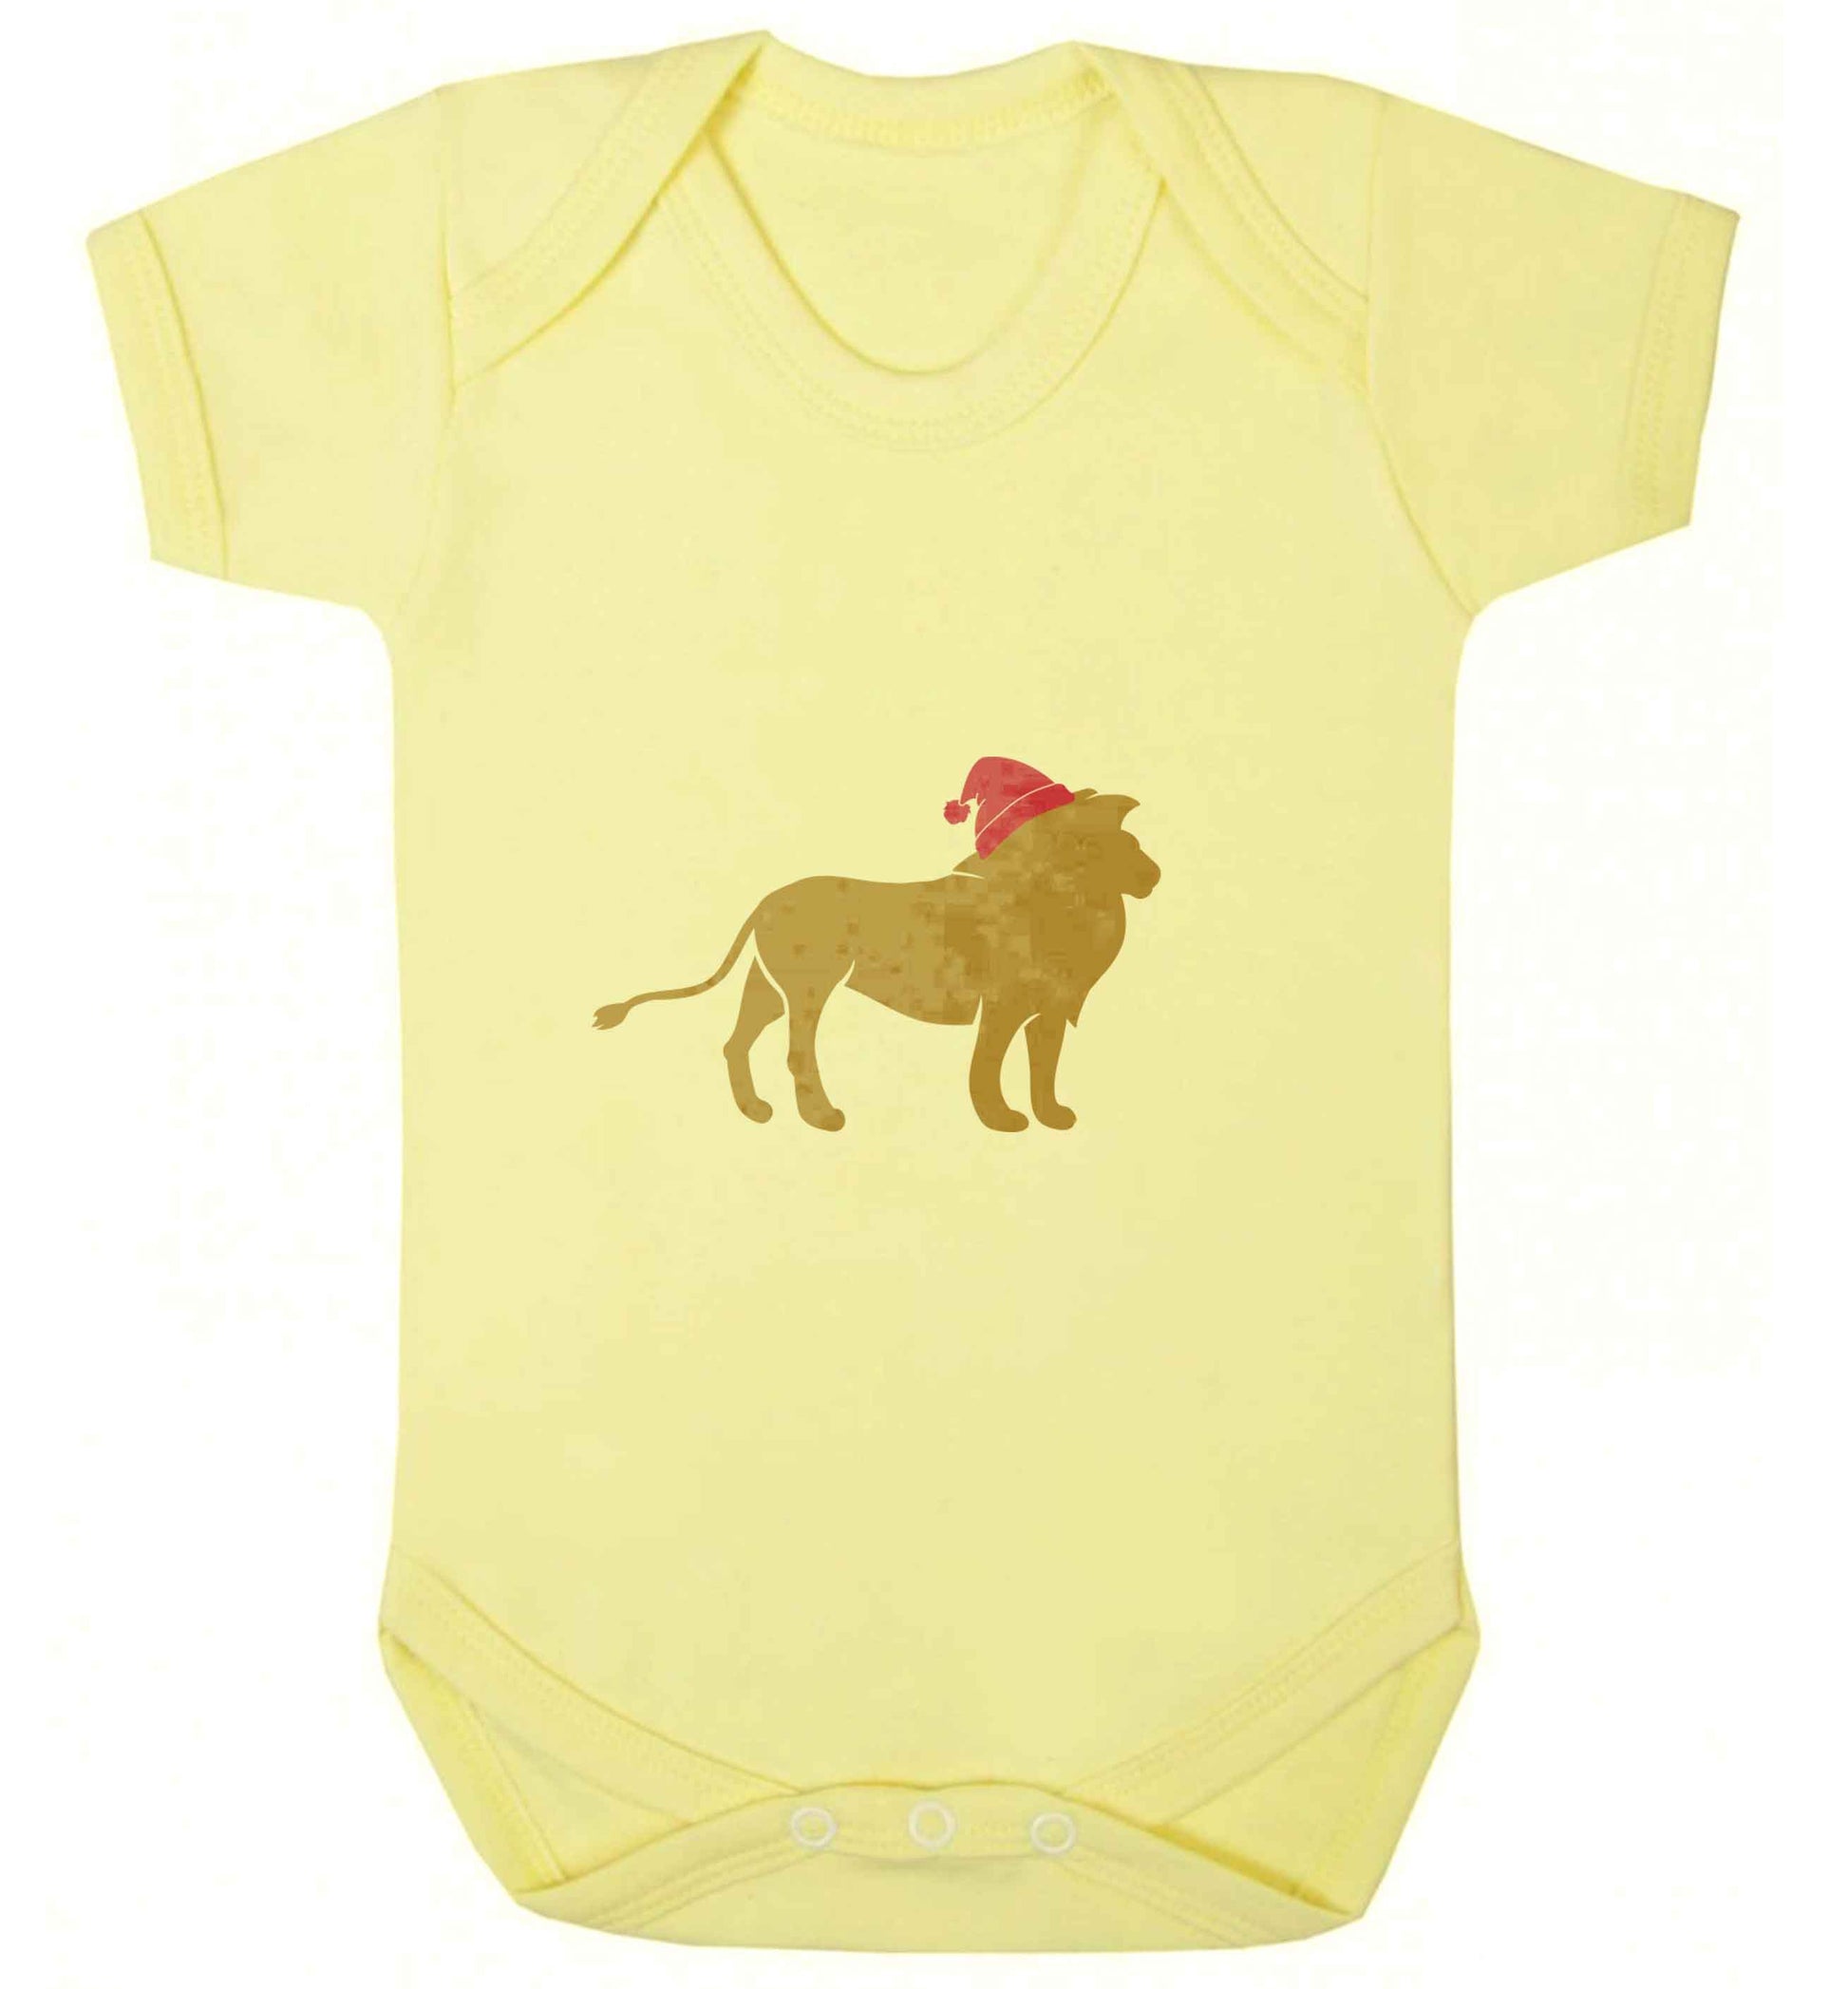 Gold lion santa baby vest pale yellow 18-24 months